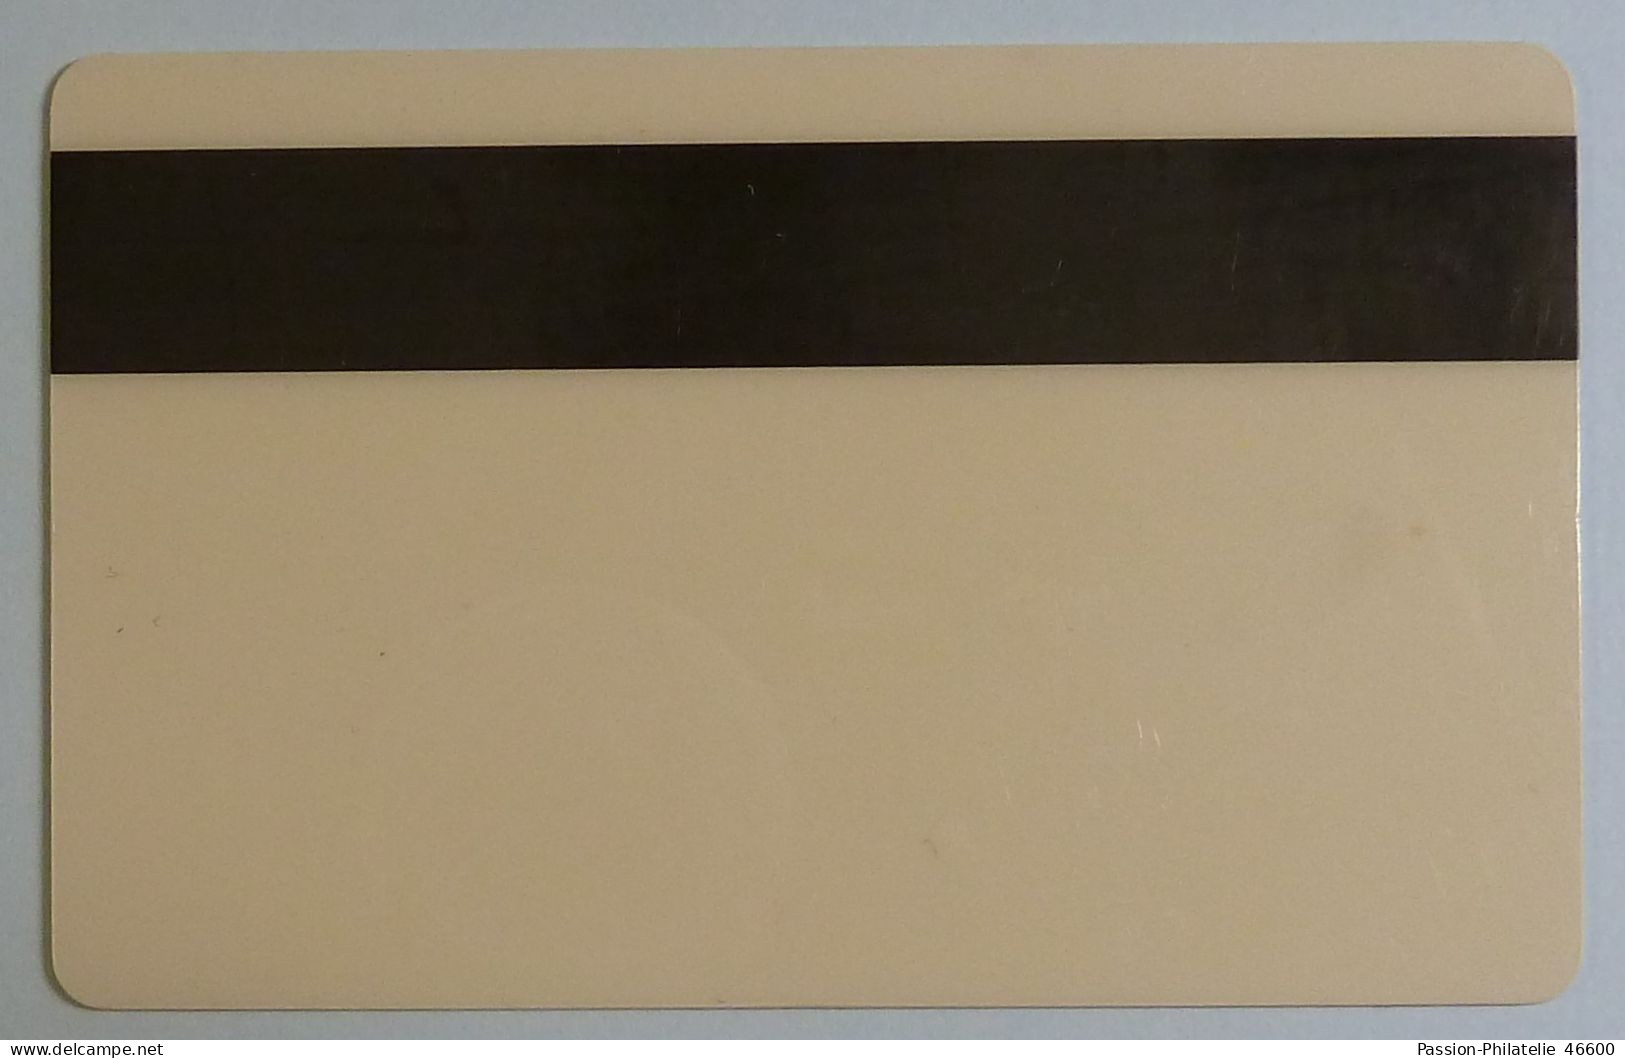 SPAIN - Landis & Gyr - 1st Trial Card - Magnetic - 1977 - Used - RR - Tests & Servicios